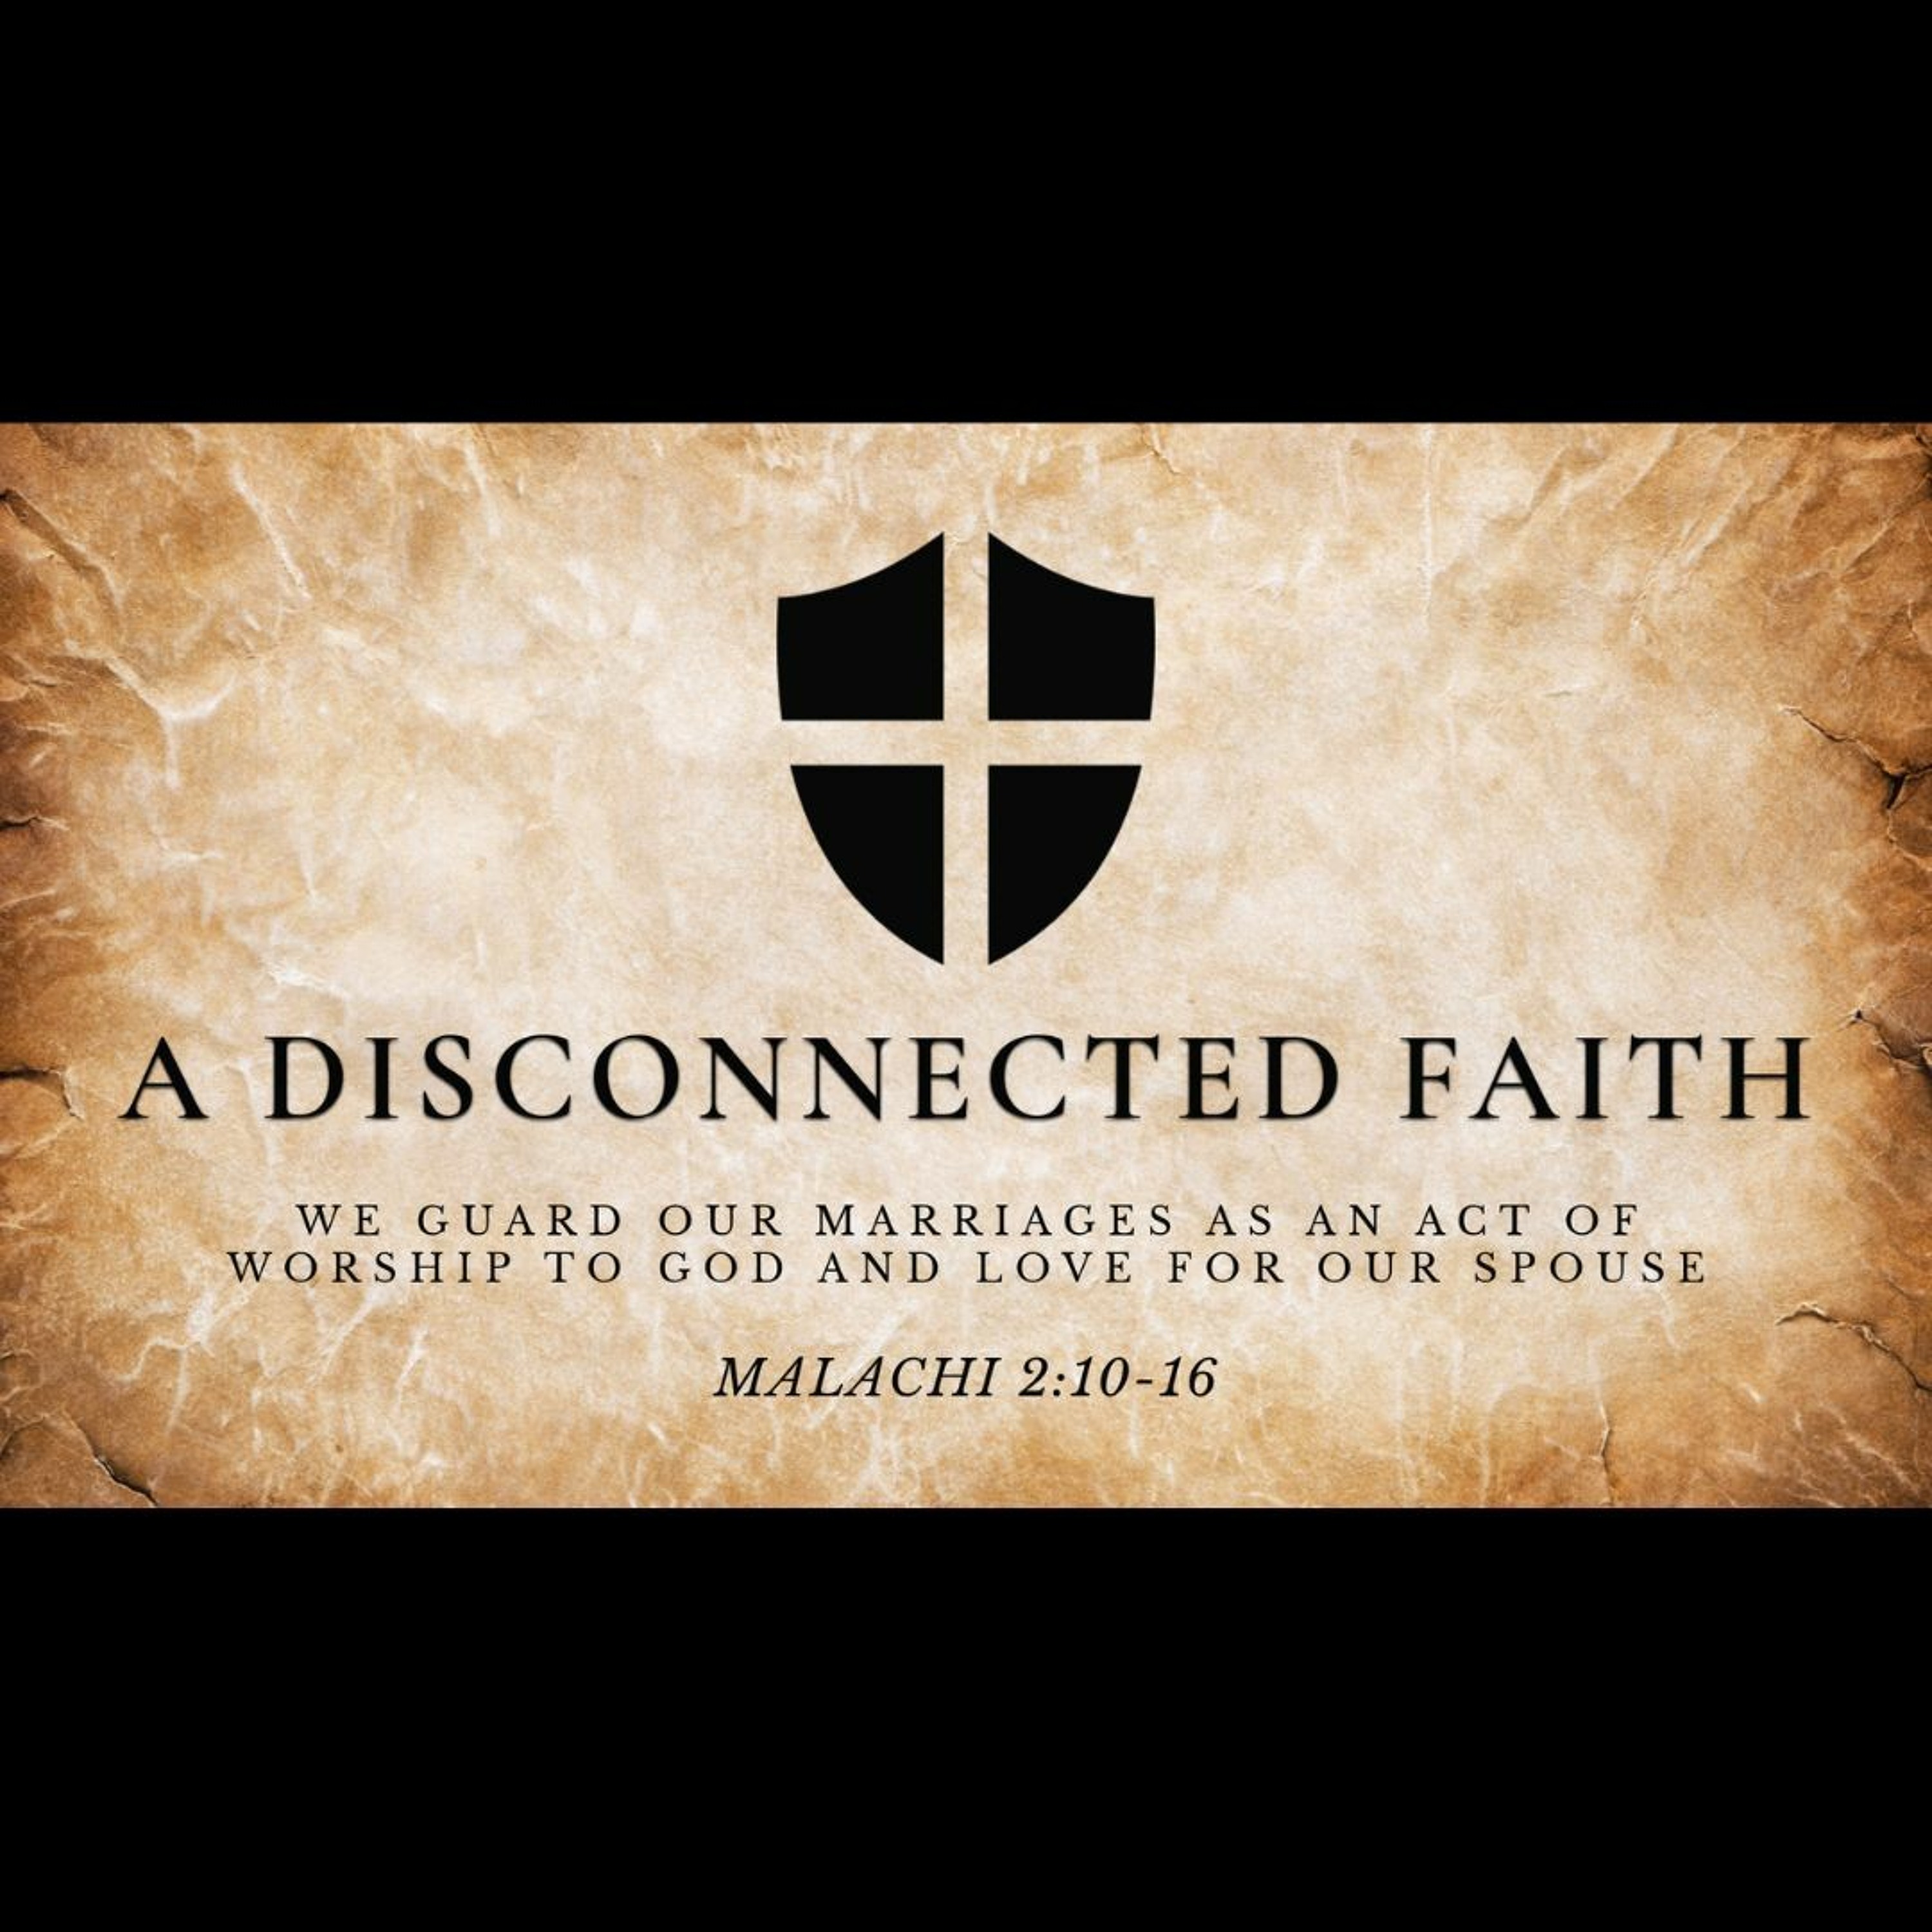 A Disconnected Faith (Malachi 2:10-16)